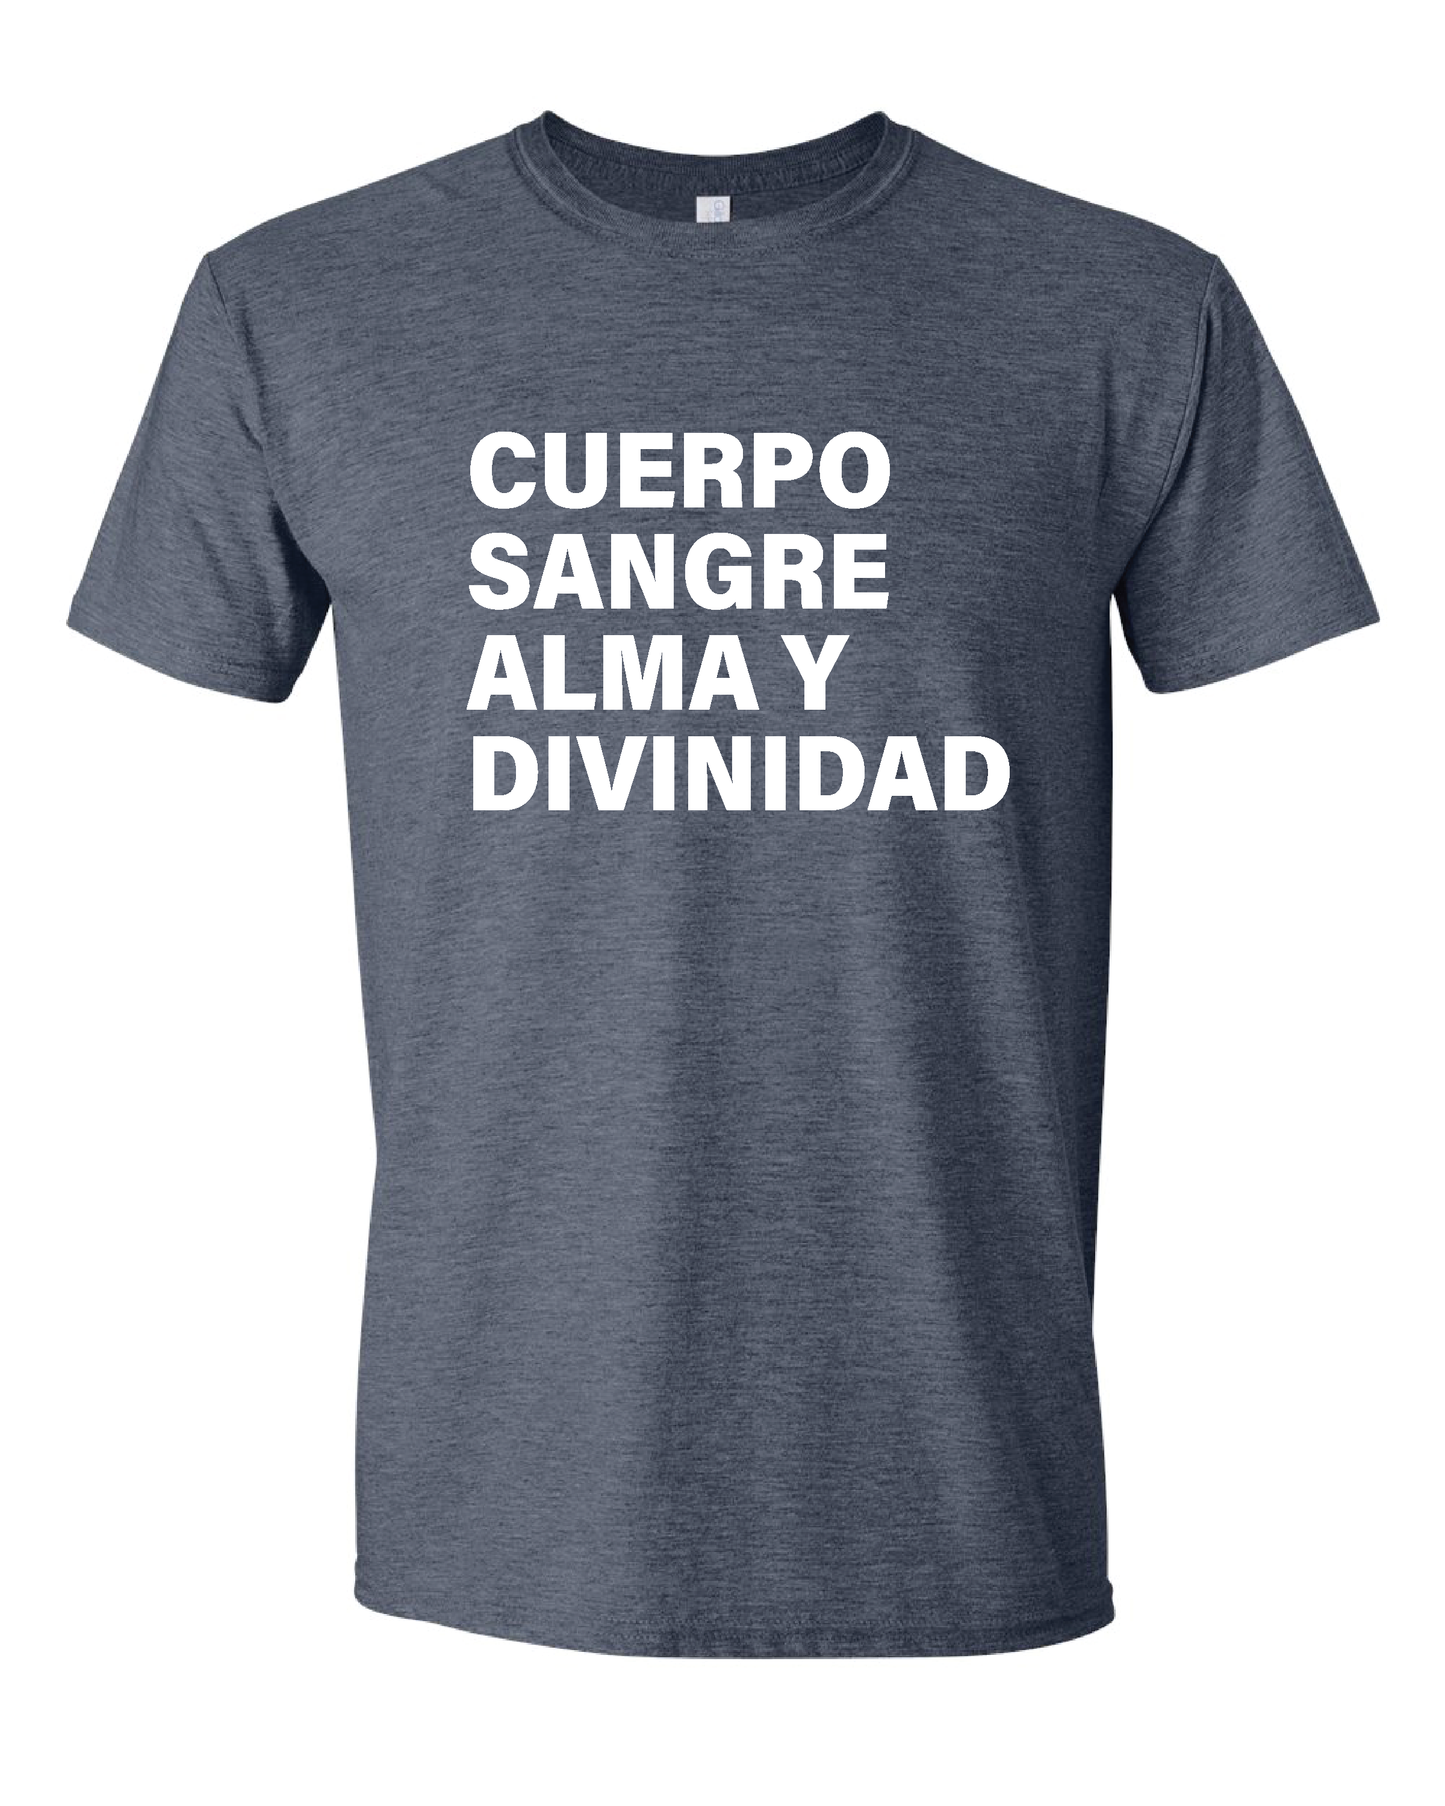 Body Blood Soul & Divinity T Shirt - Español